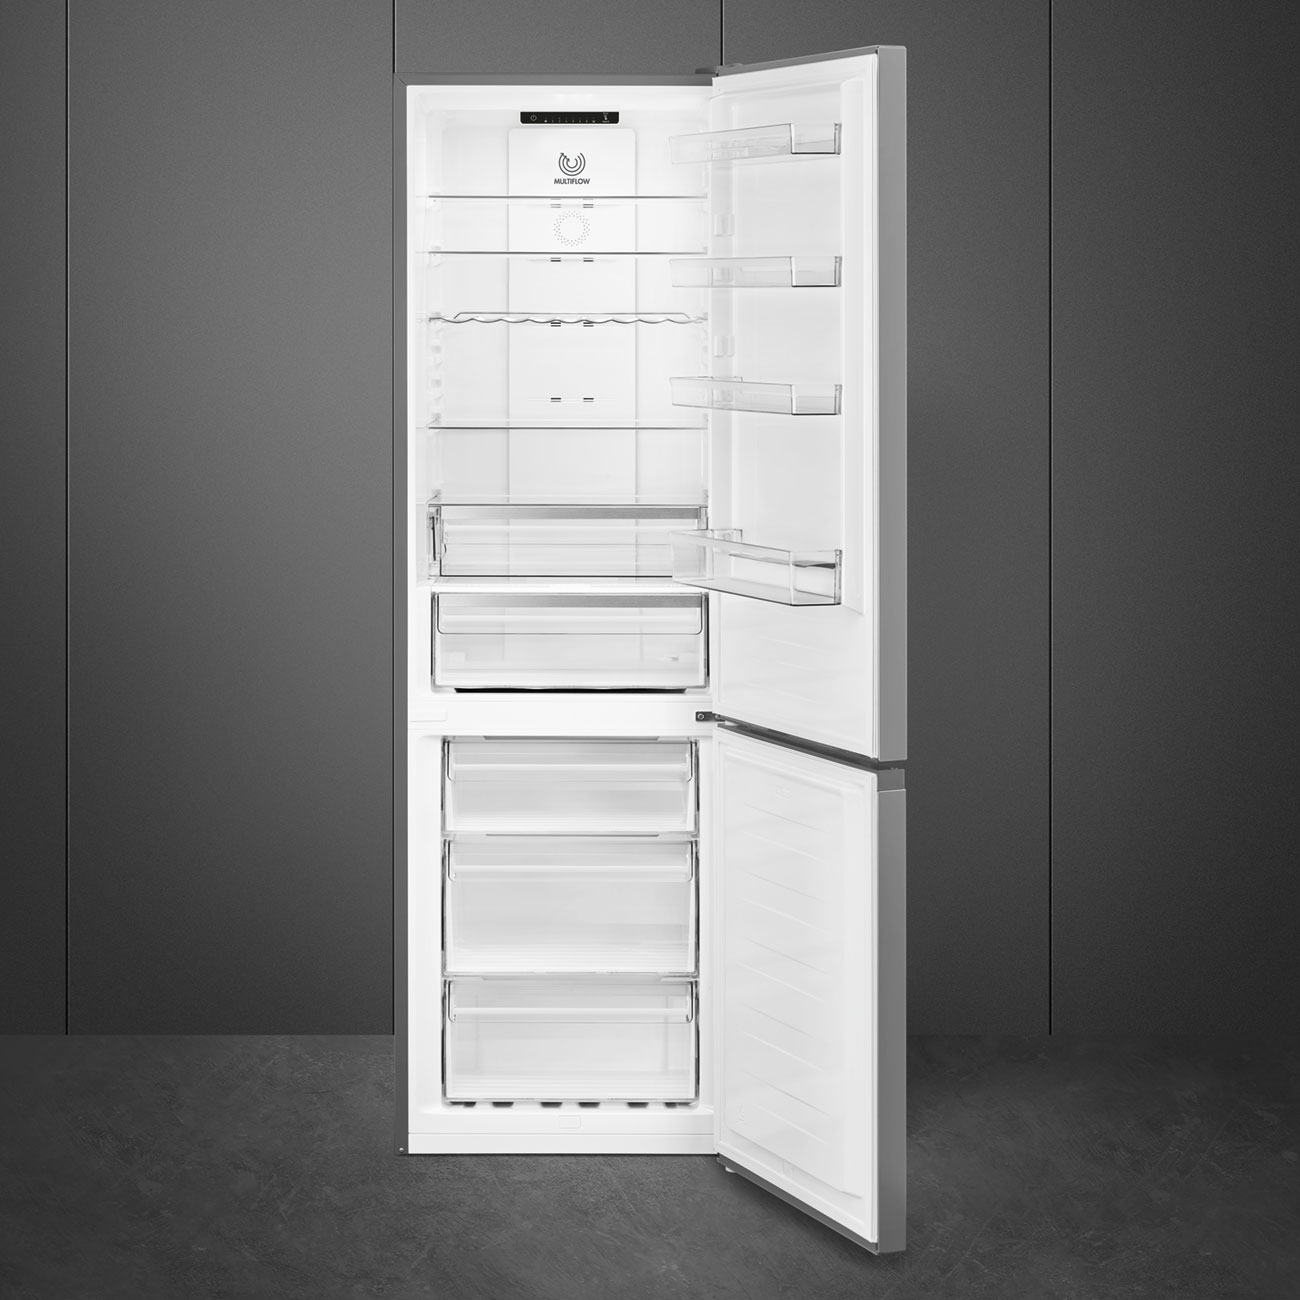 Bottom Mount Free standing refrigerator - Smeg_1